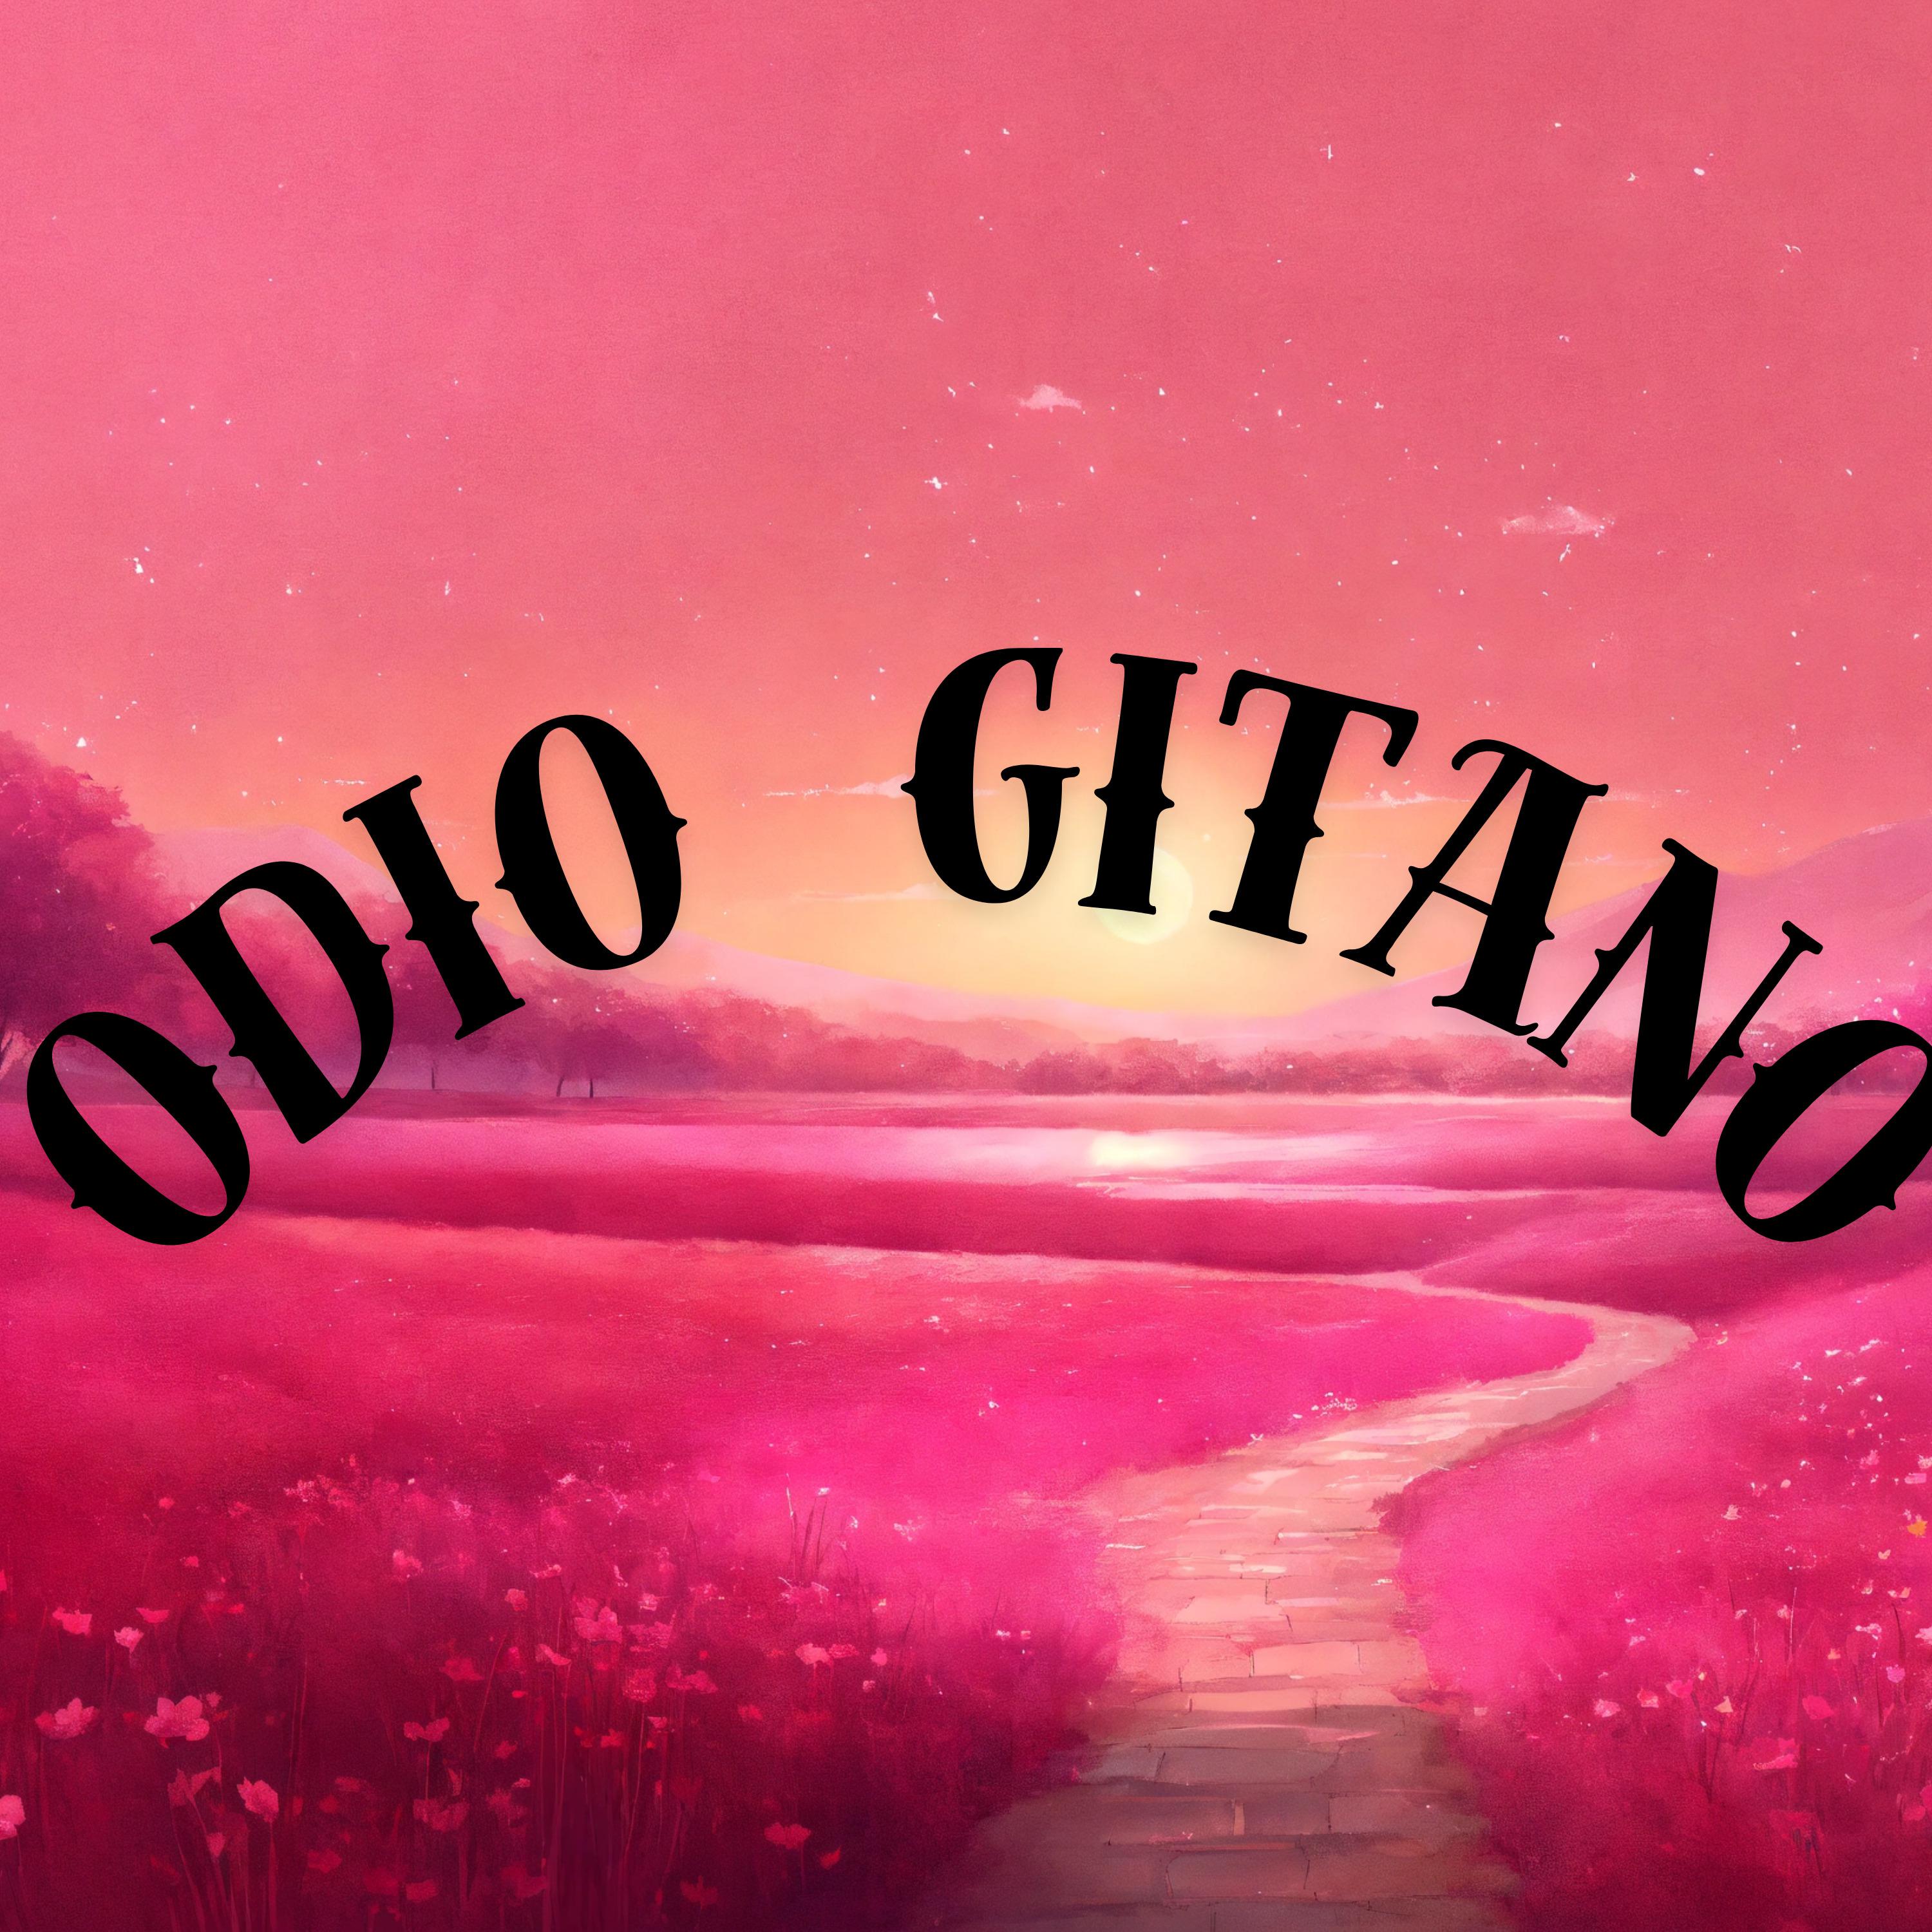 Постер альбома Odio Gitano